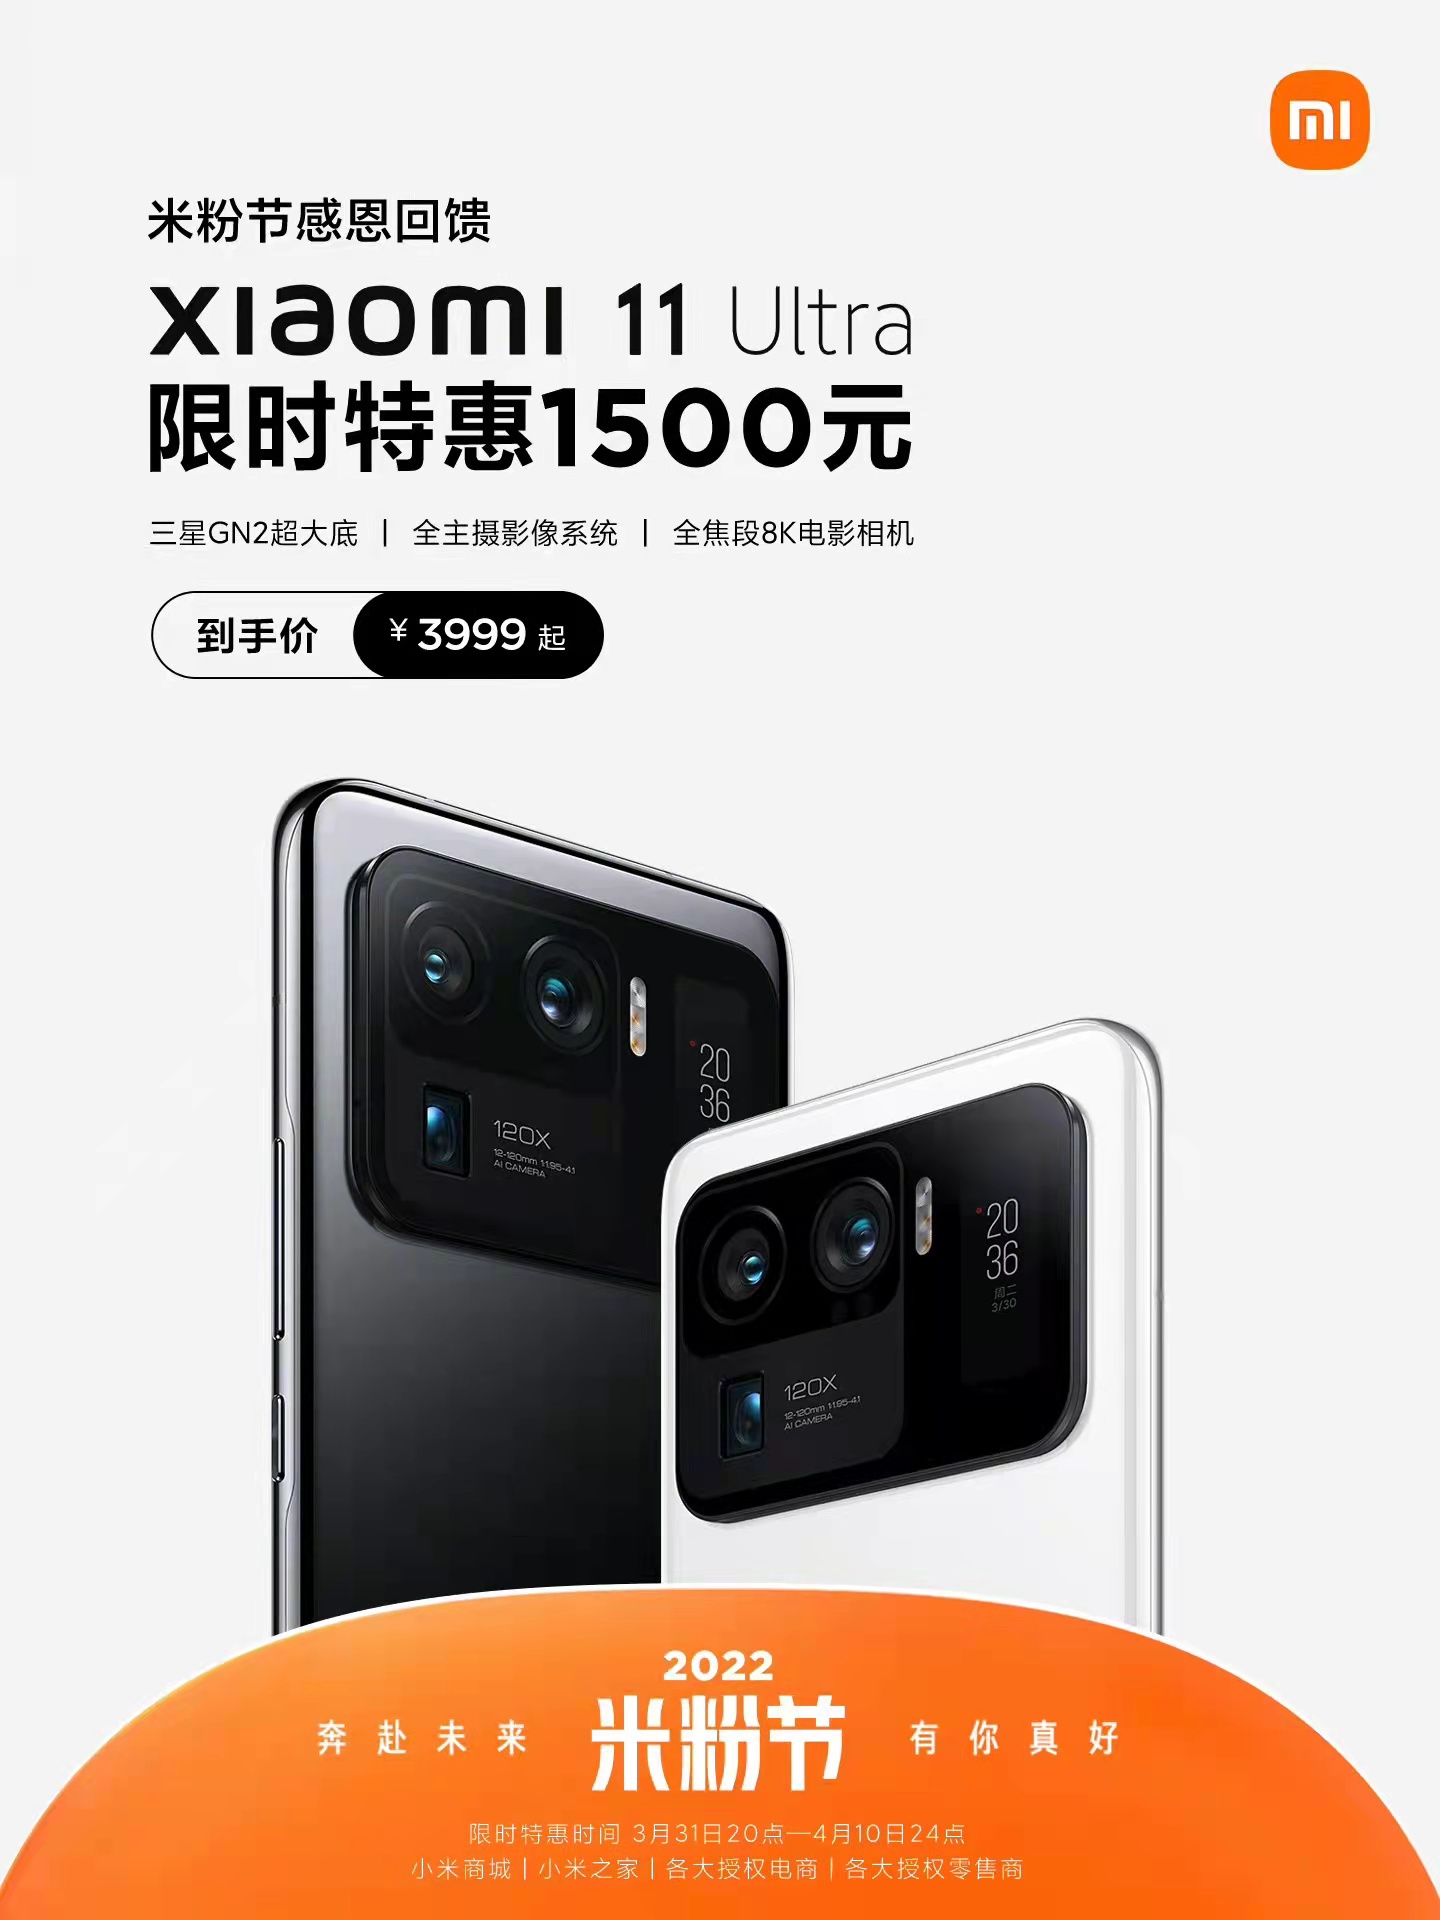 Xiaomi Mi 11 Ultra is down by 1500 yuan!Falling below 4K, the price/performance ratio soars